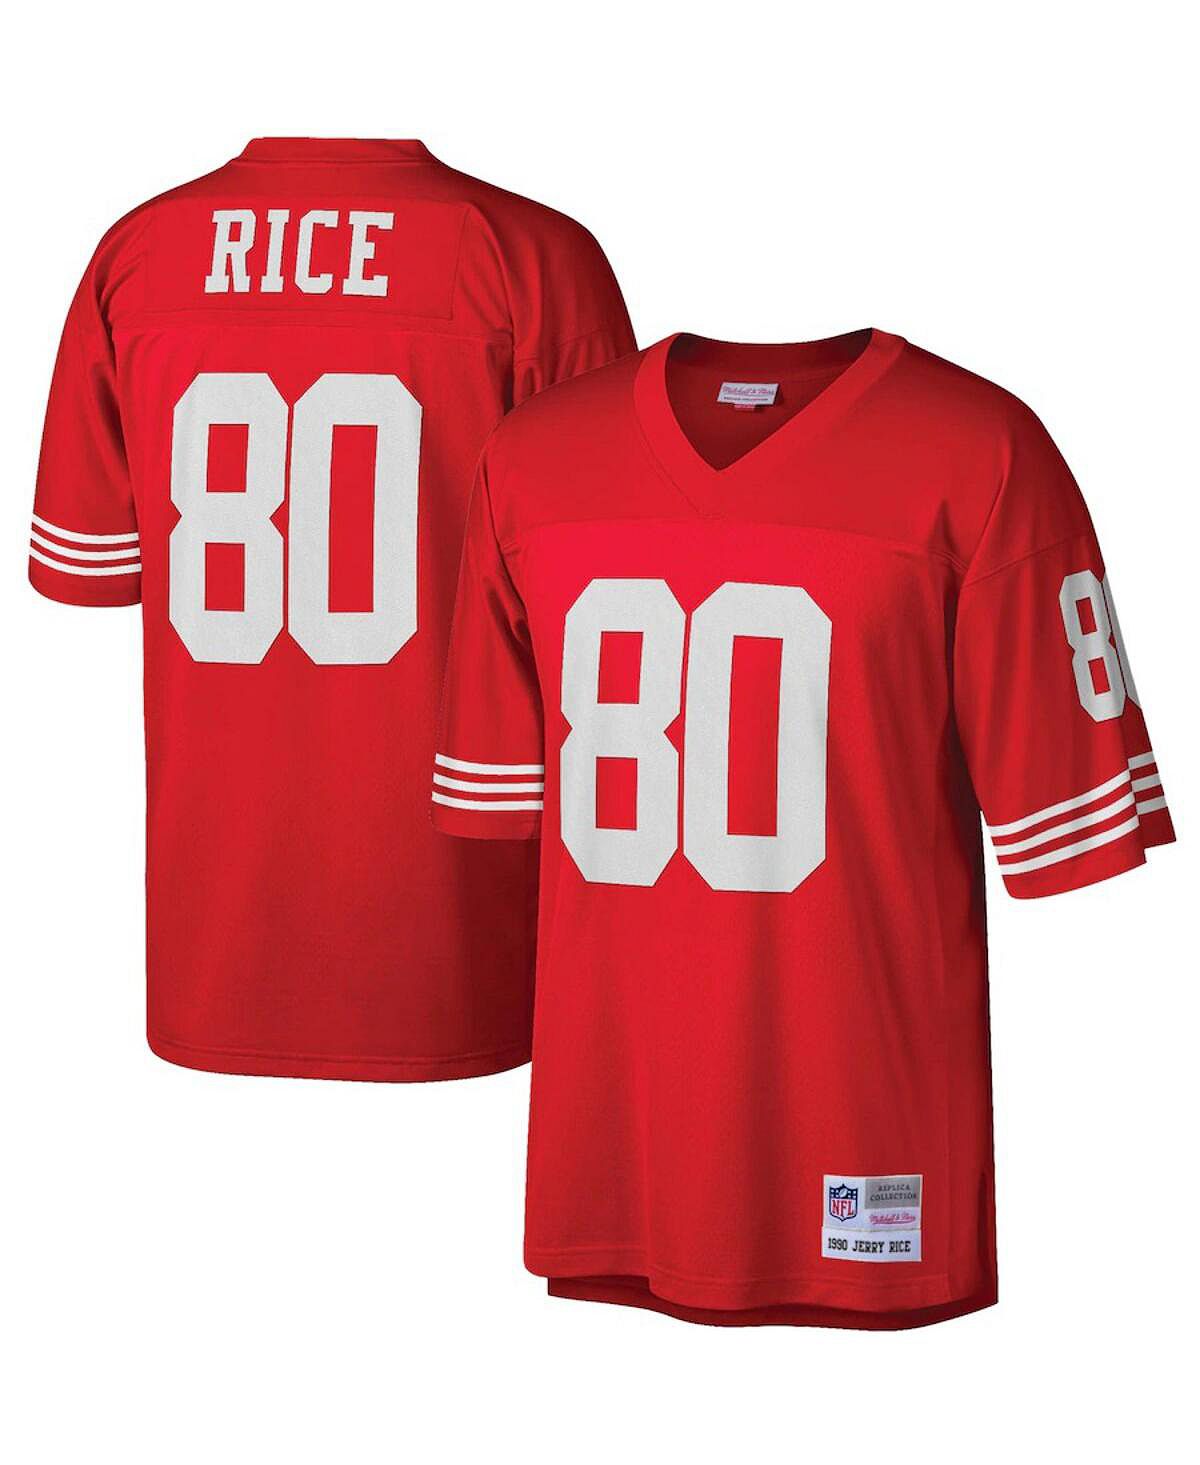 цена Мужская футболка Джерри Райса Скарлет Сан-Франциско 49ers Big and Tall 1990 года, реплика вышедшего на пенсию игрока Mitchell & Ness